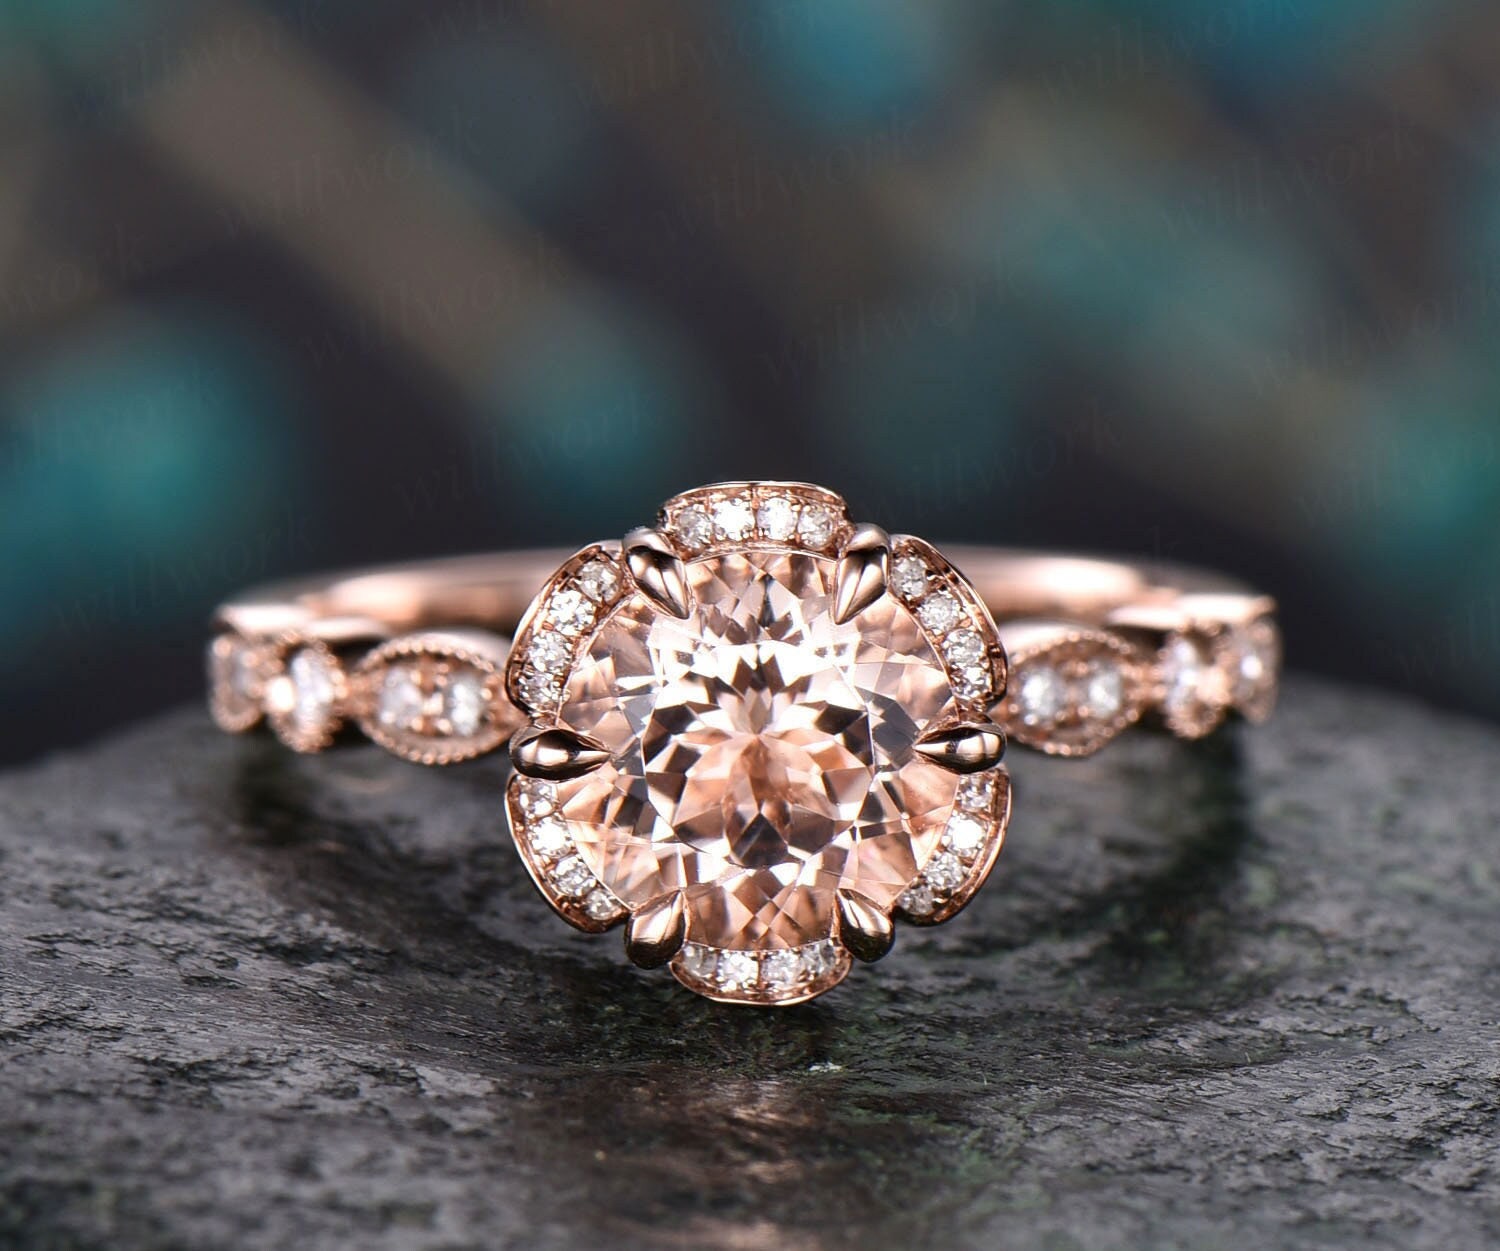 Double Heart Diamond Ring - Genuine Ladies 14K Gold Ring